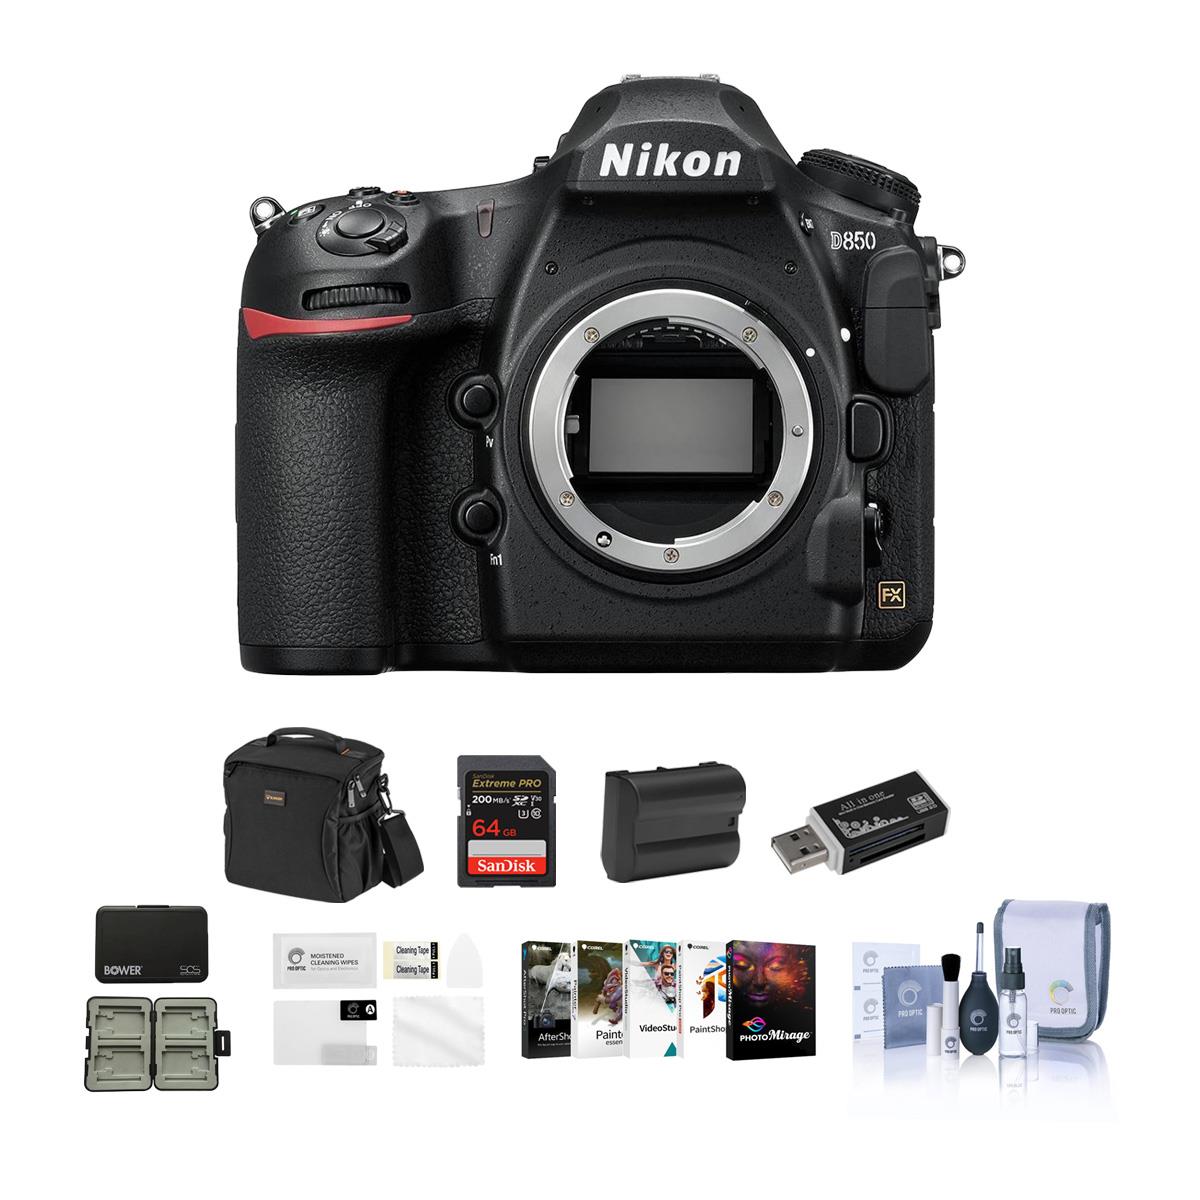 Nikon D850 DSLR Camera Body With Free PC Accessory Bundle